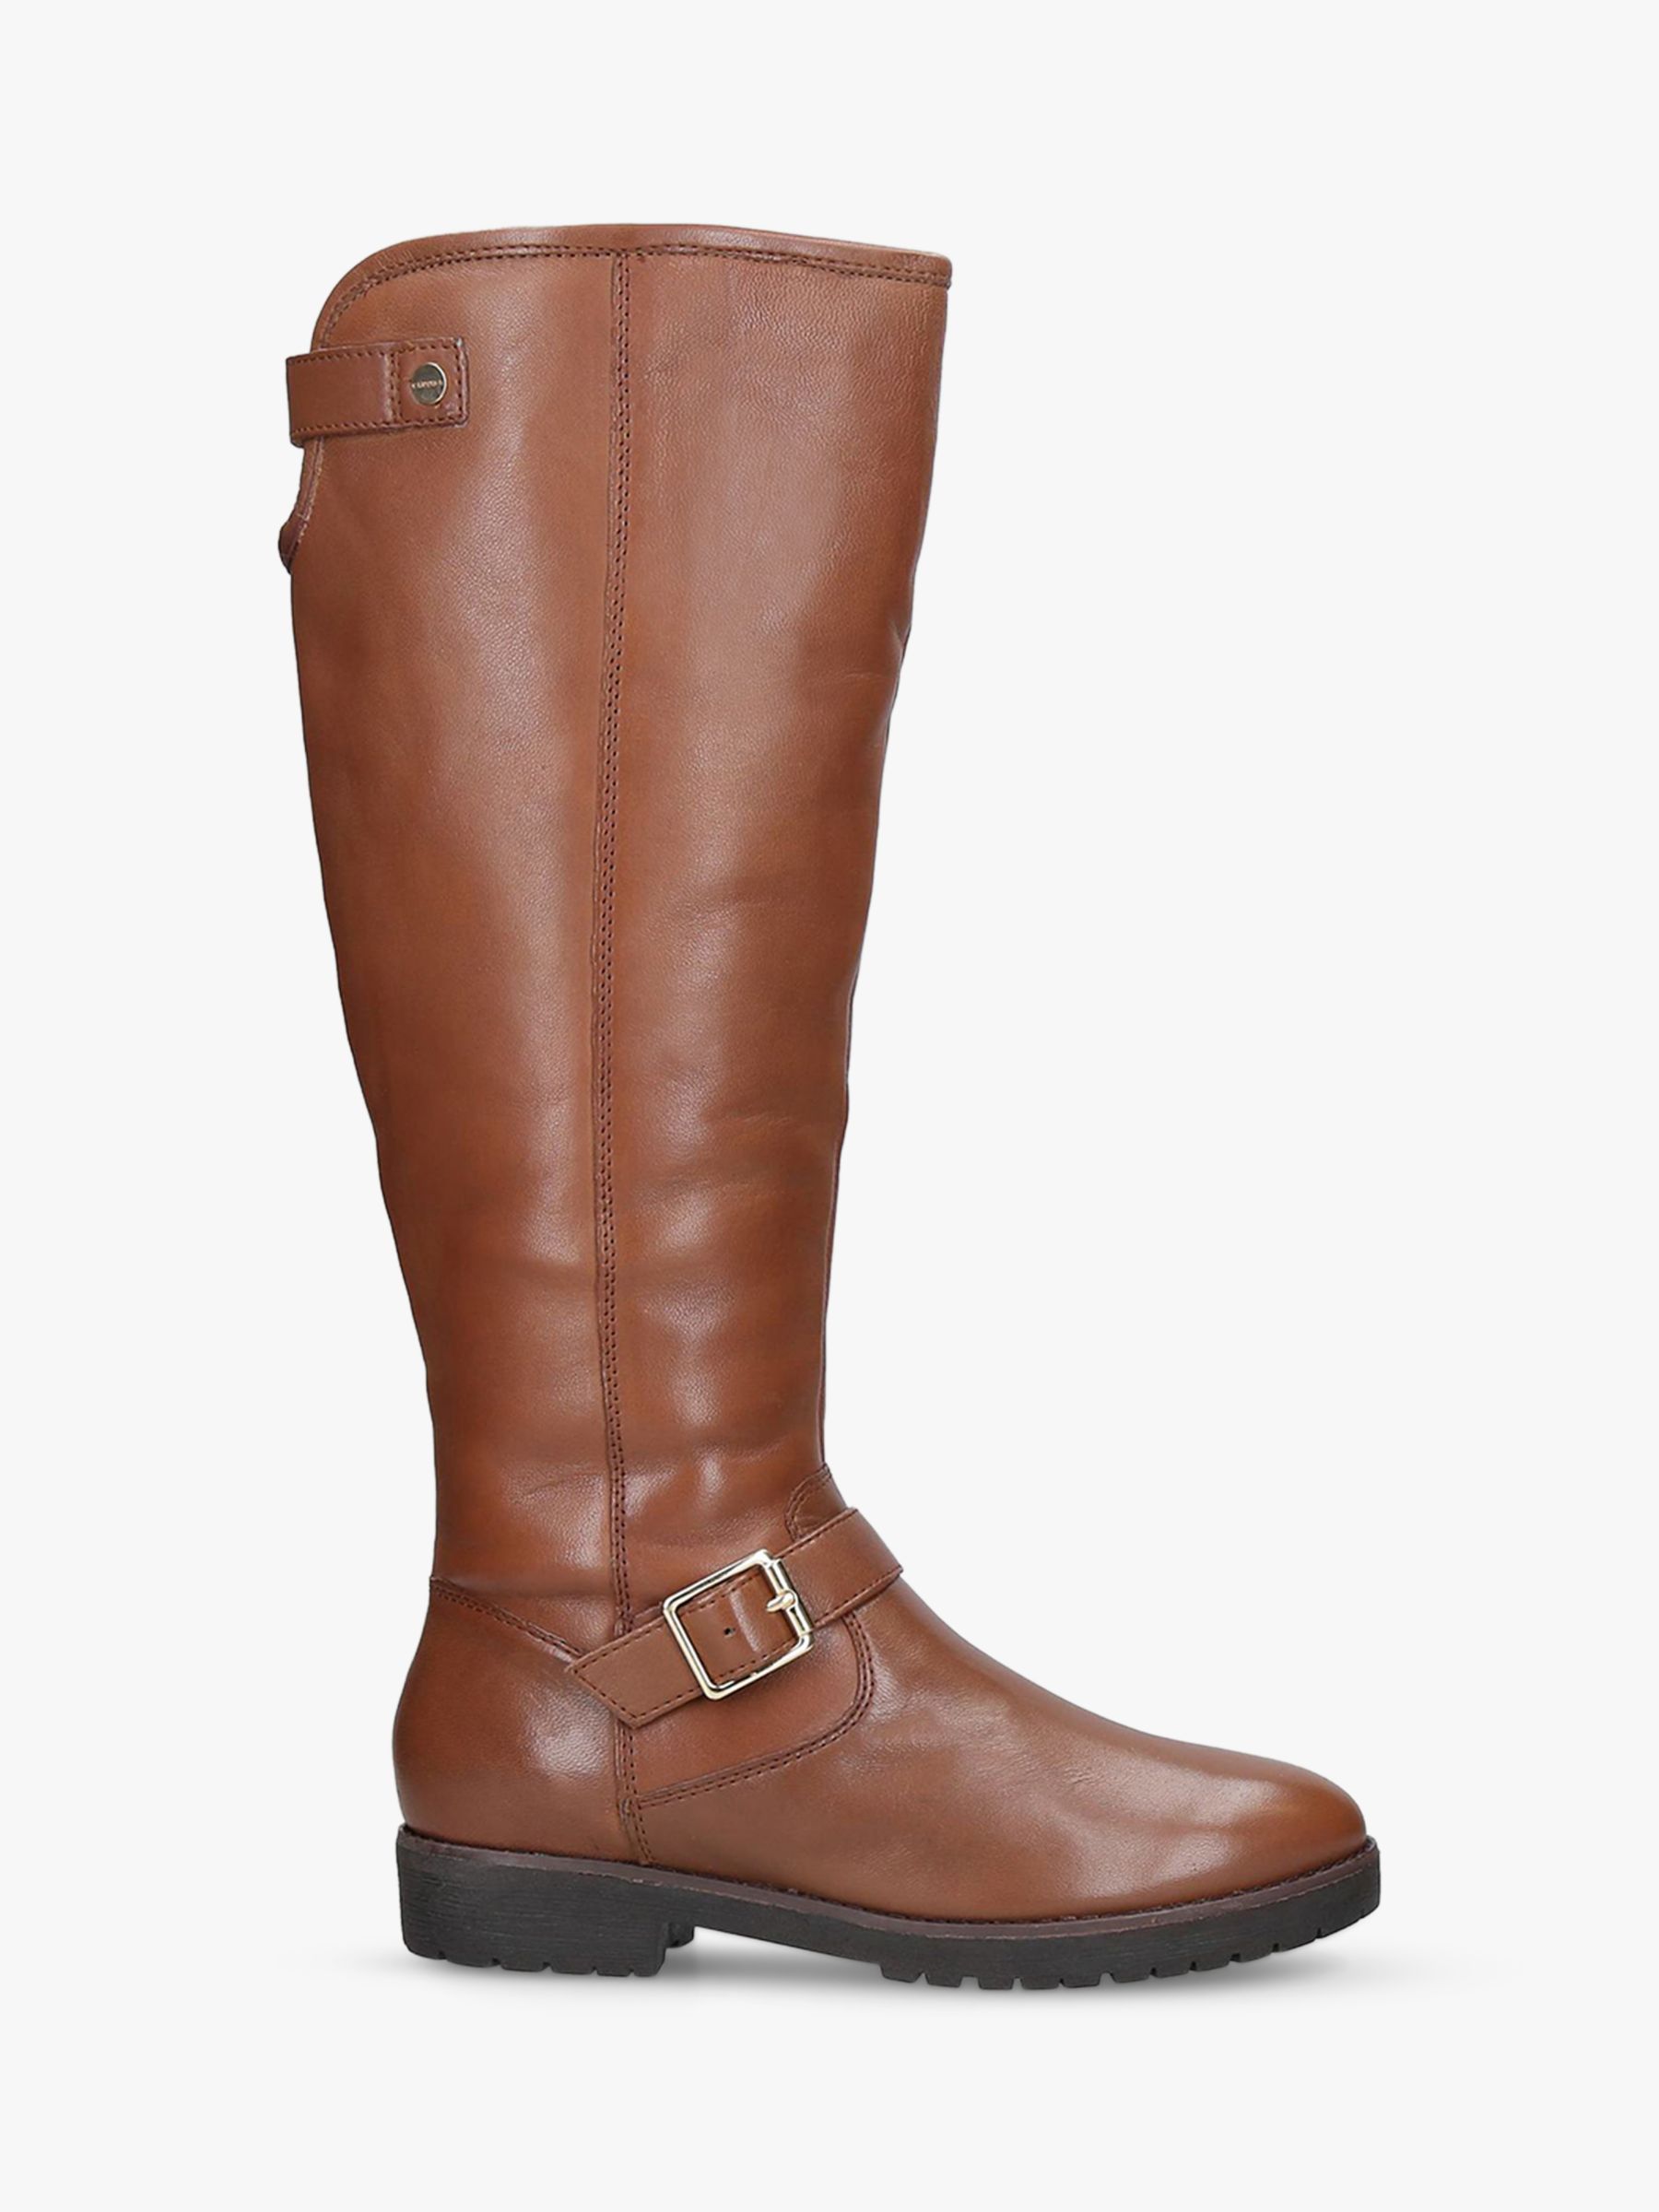 Carvela Samba Buckle Detail Knee High Boots, Tan Leather